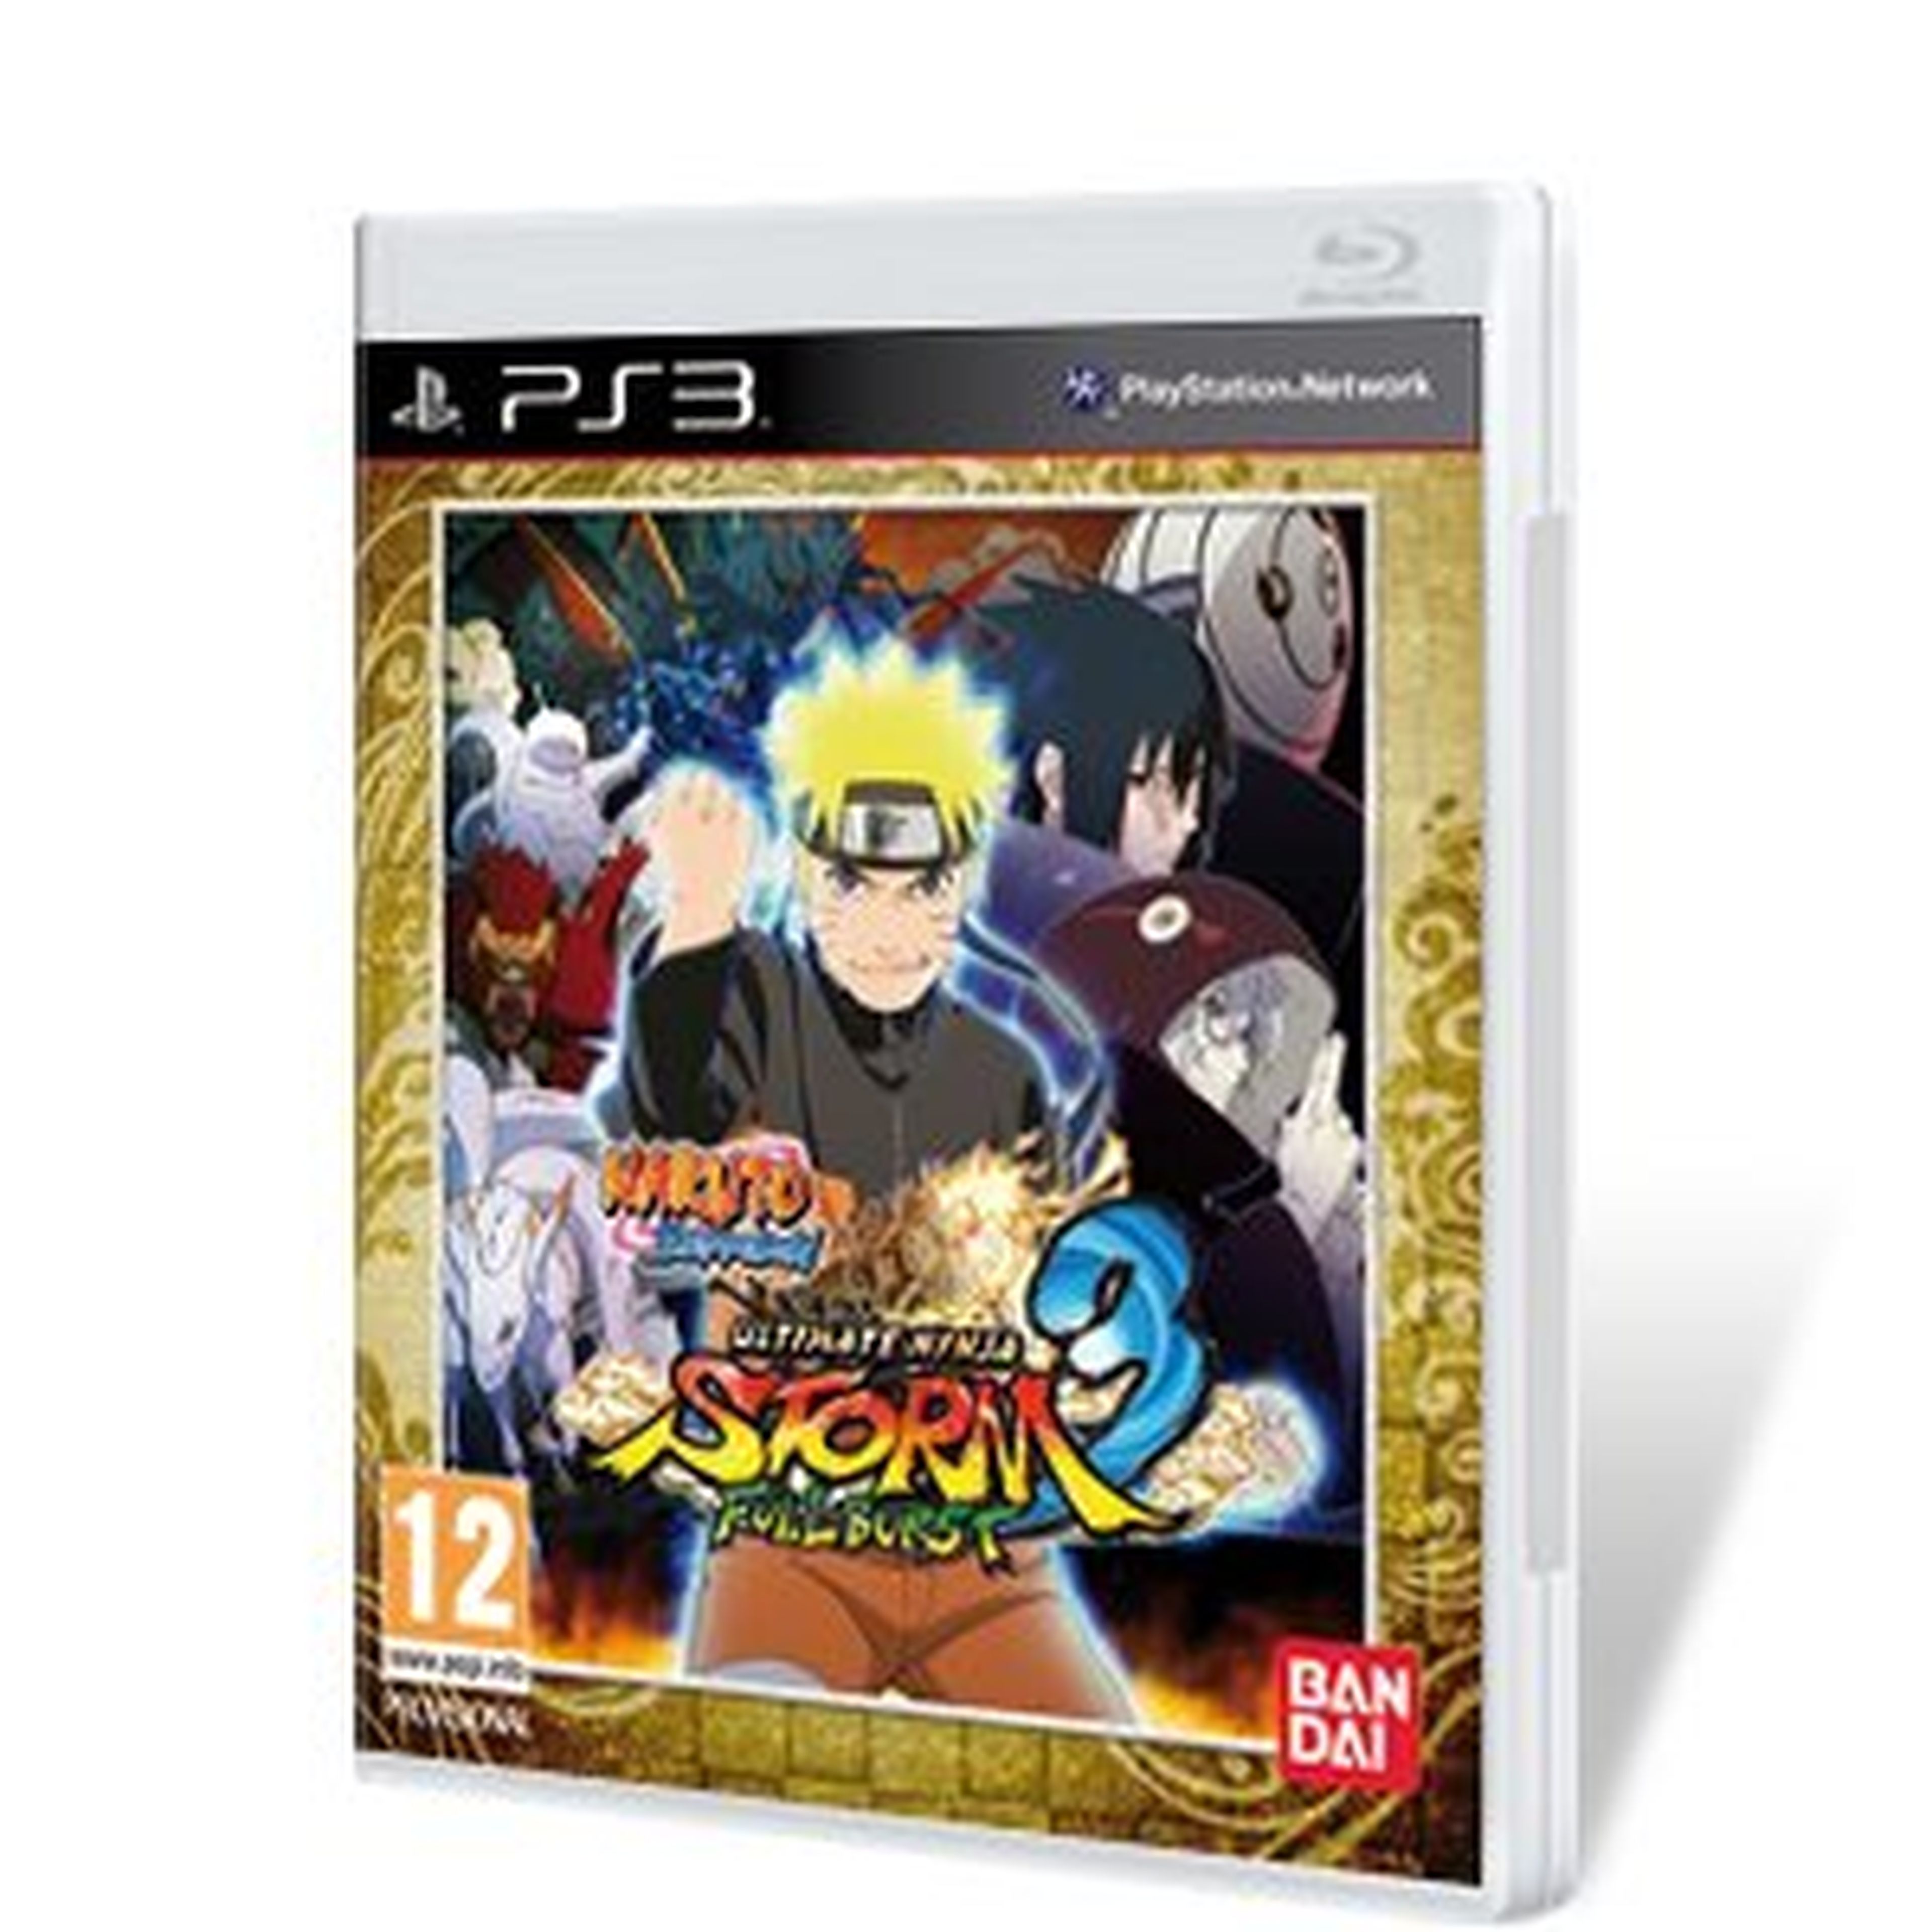 Naruto Shippuden Ultimate Ninja Storm 3 Full Burst para PS3